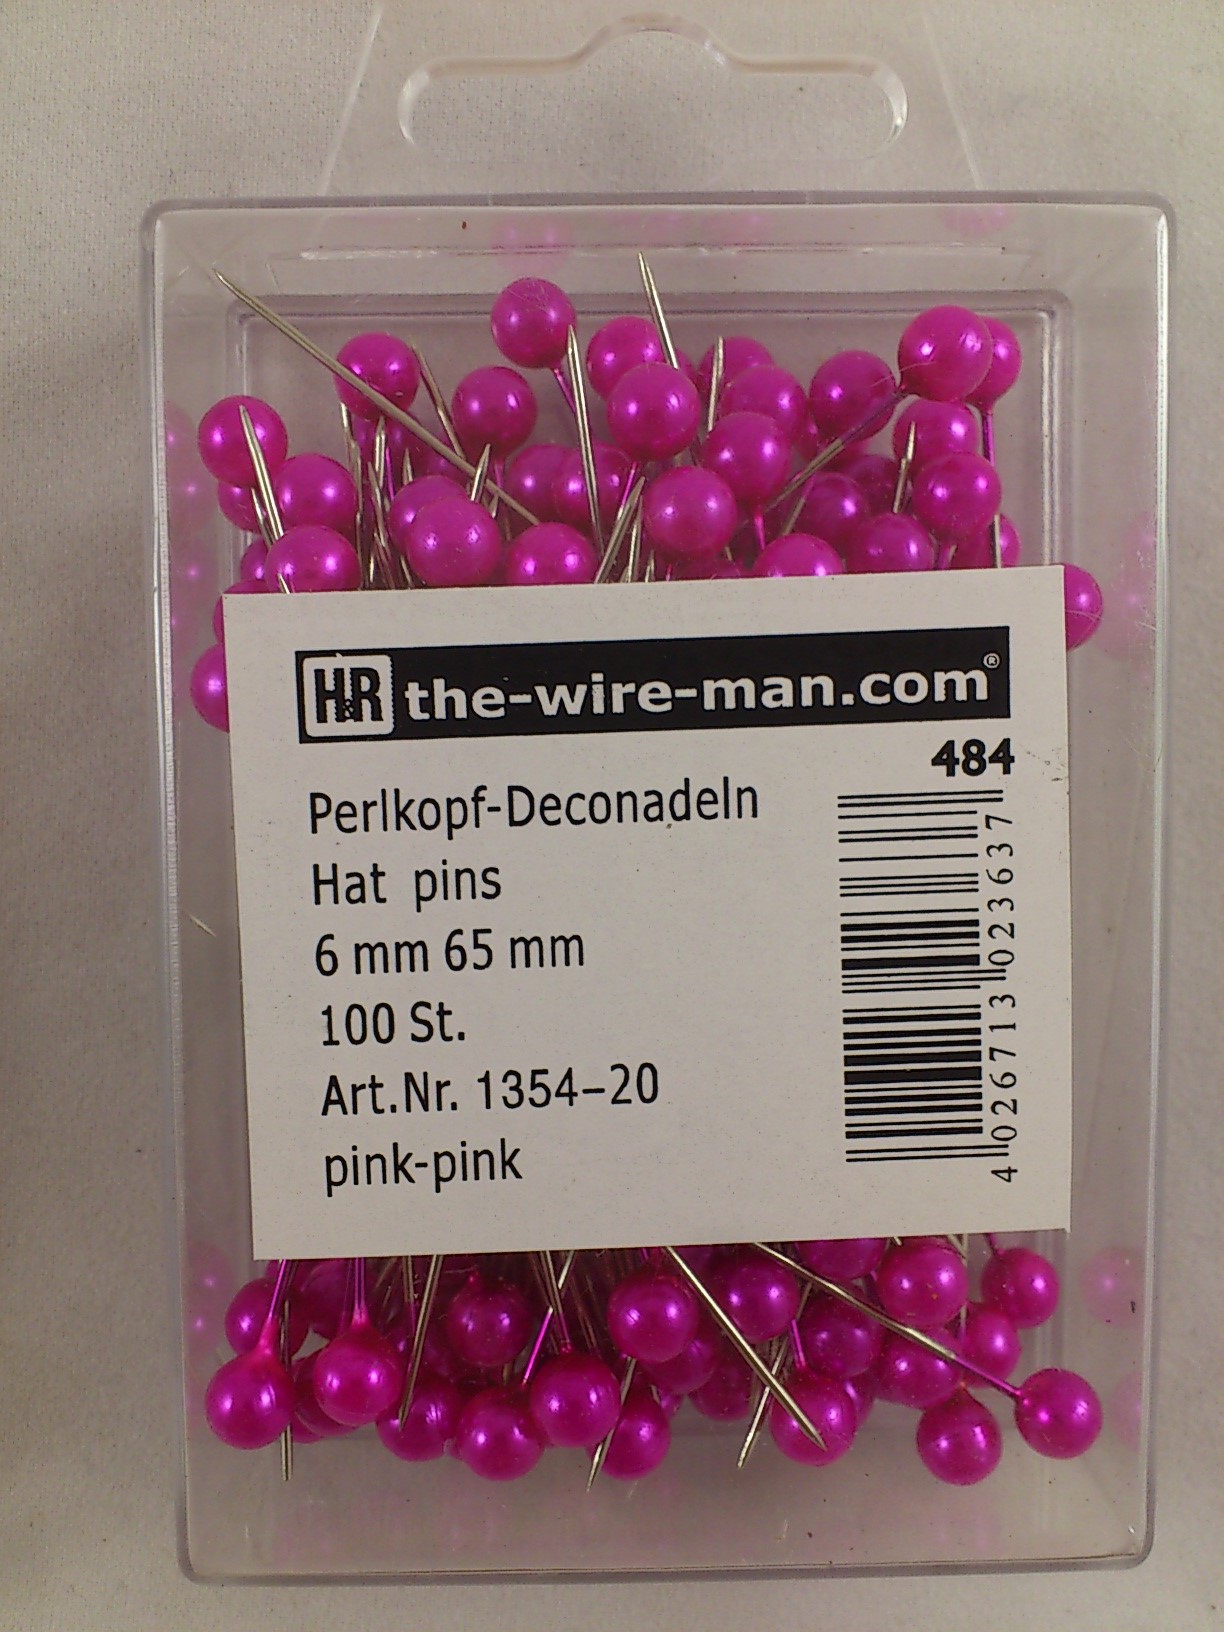 Farbigen Pins 6 mm 100 st. pink